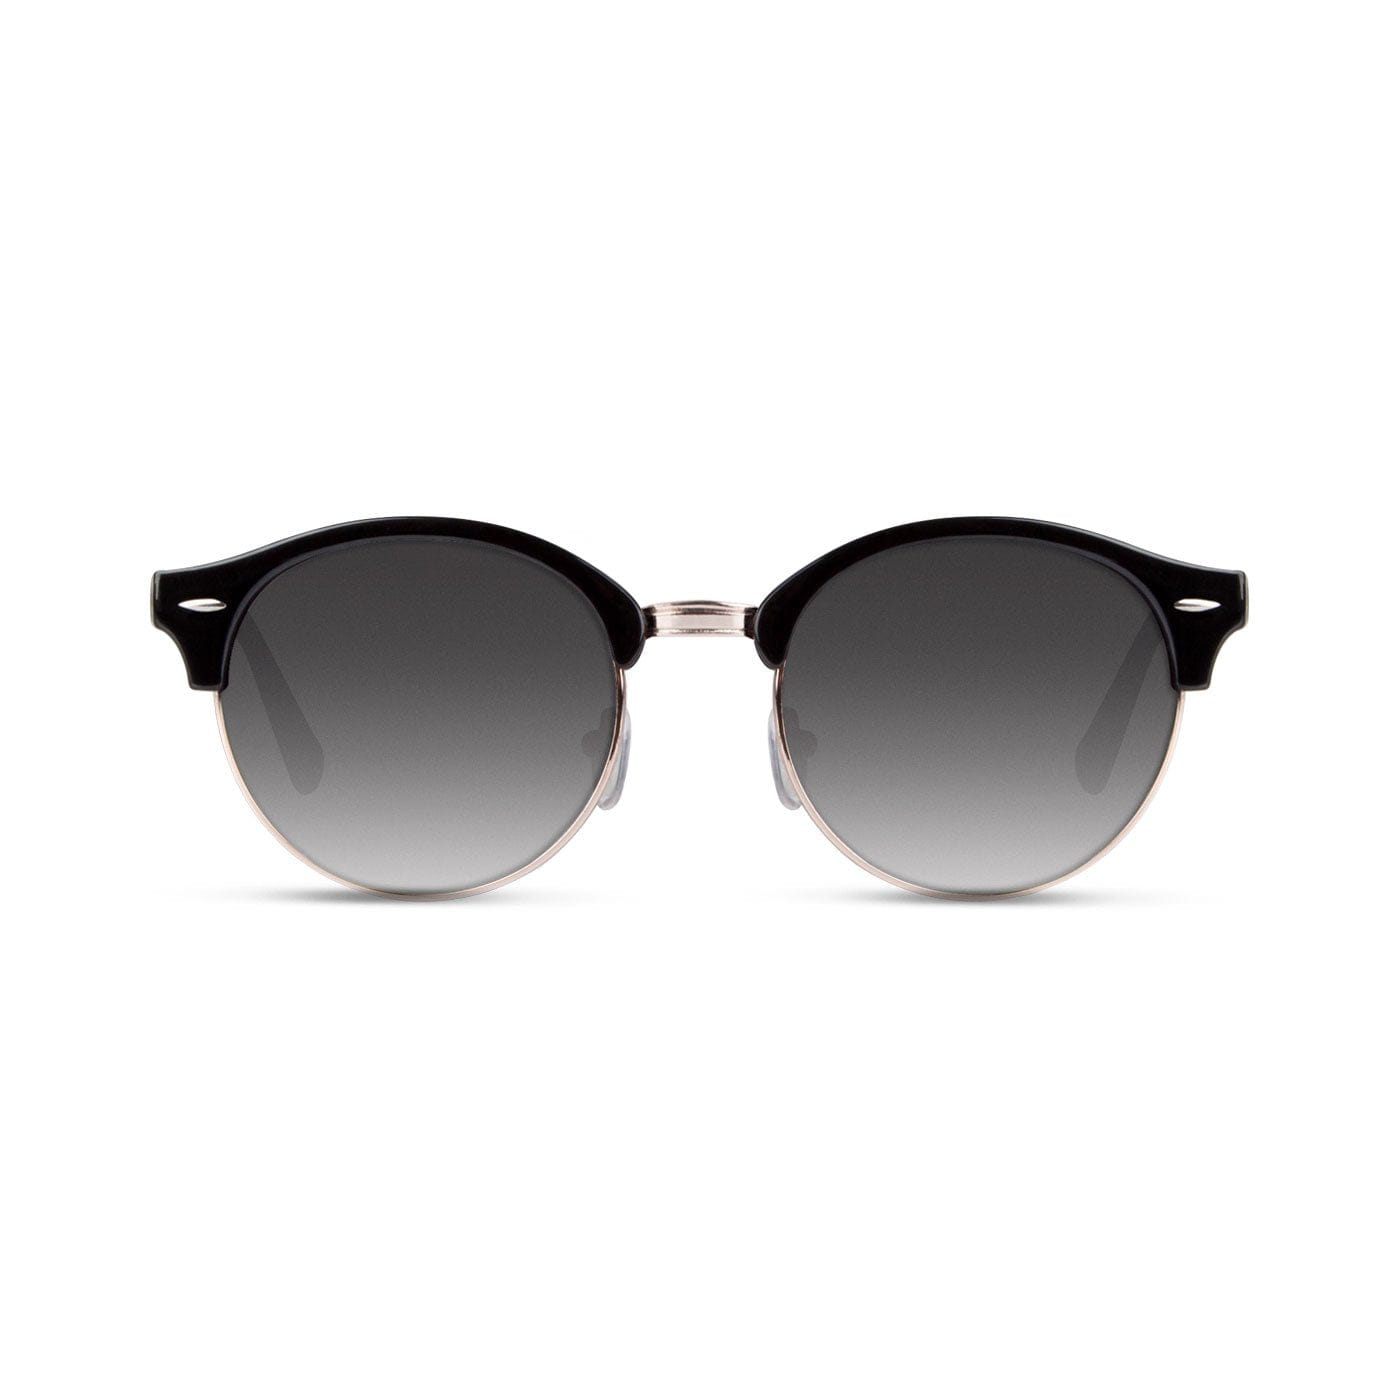 Taruta Shinny Black Gold / Grad Black Sunglasses